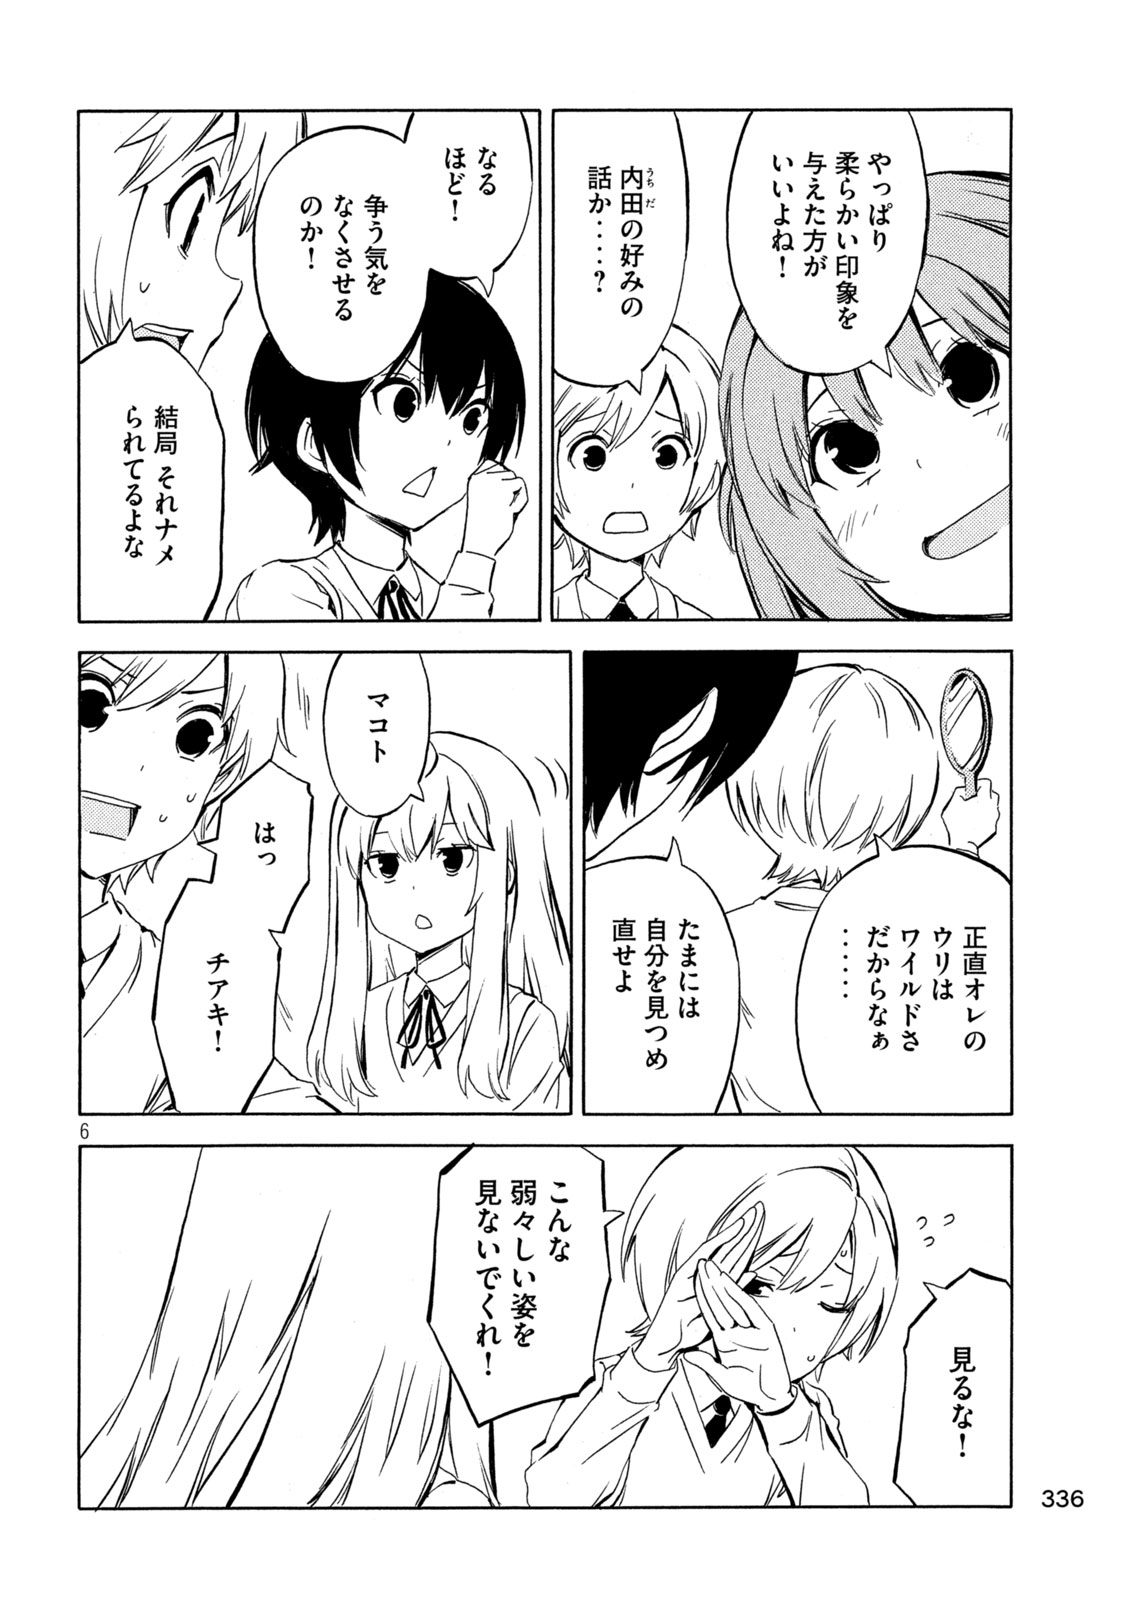 Minami-ke - Chapter 488 - Page 6